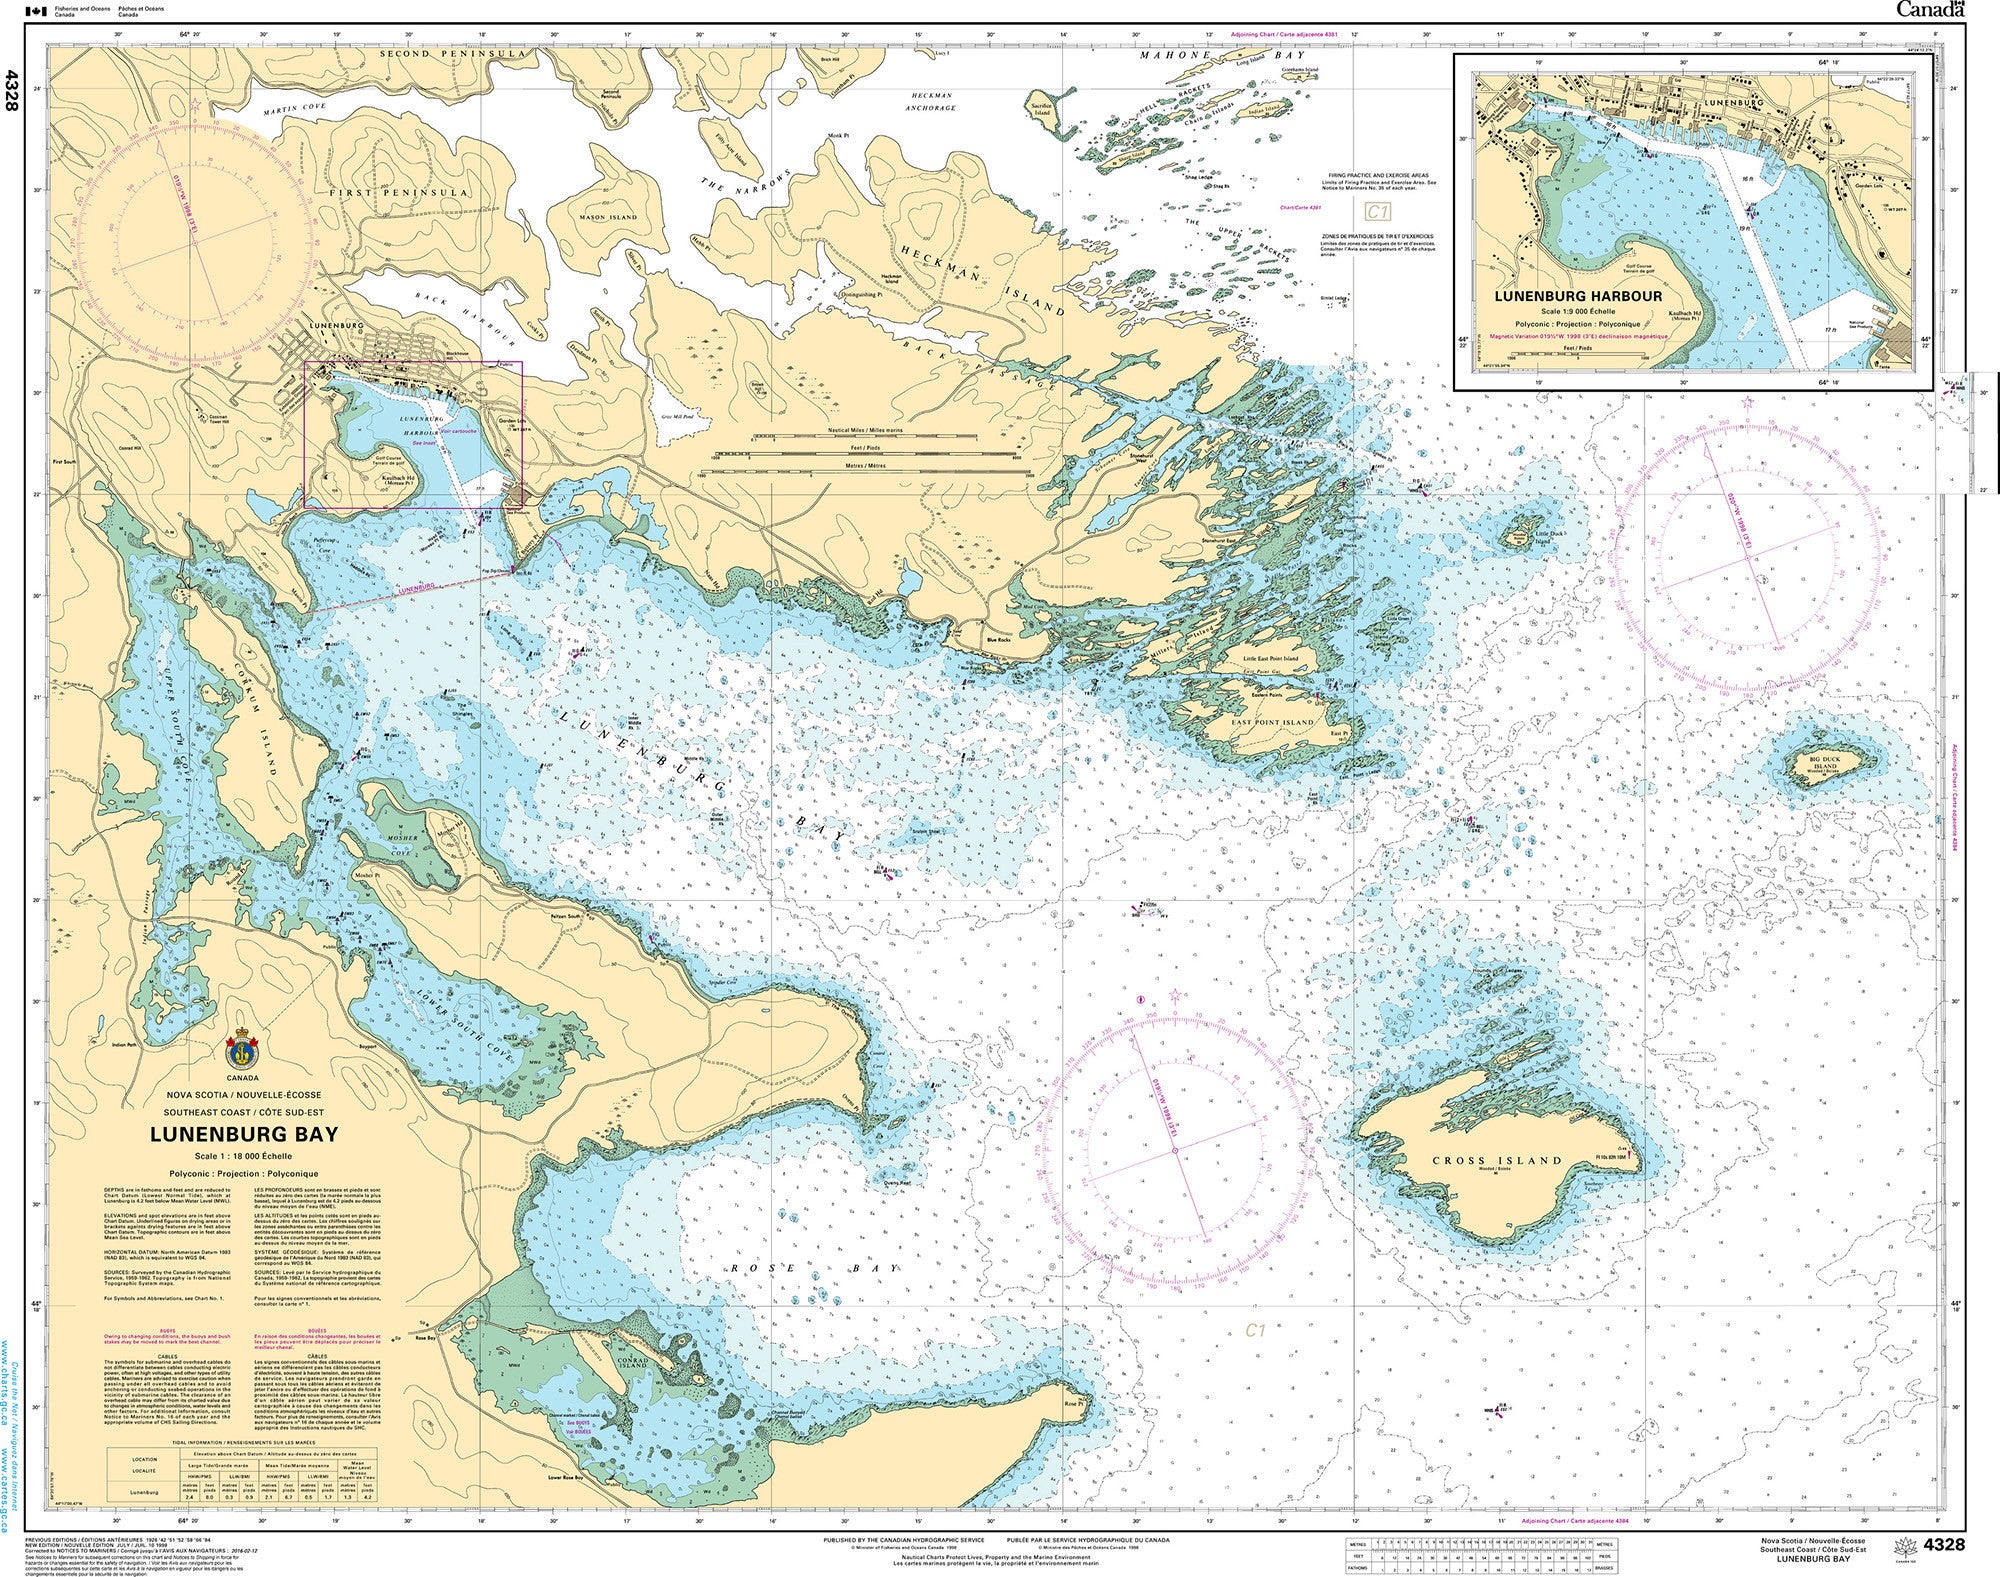 Canadian Hydrographic Service Nautical Chart CHS4328: Lunenburg Bay